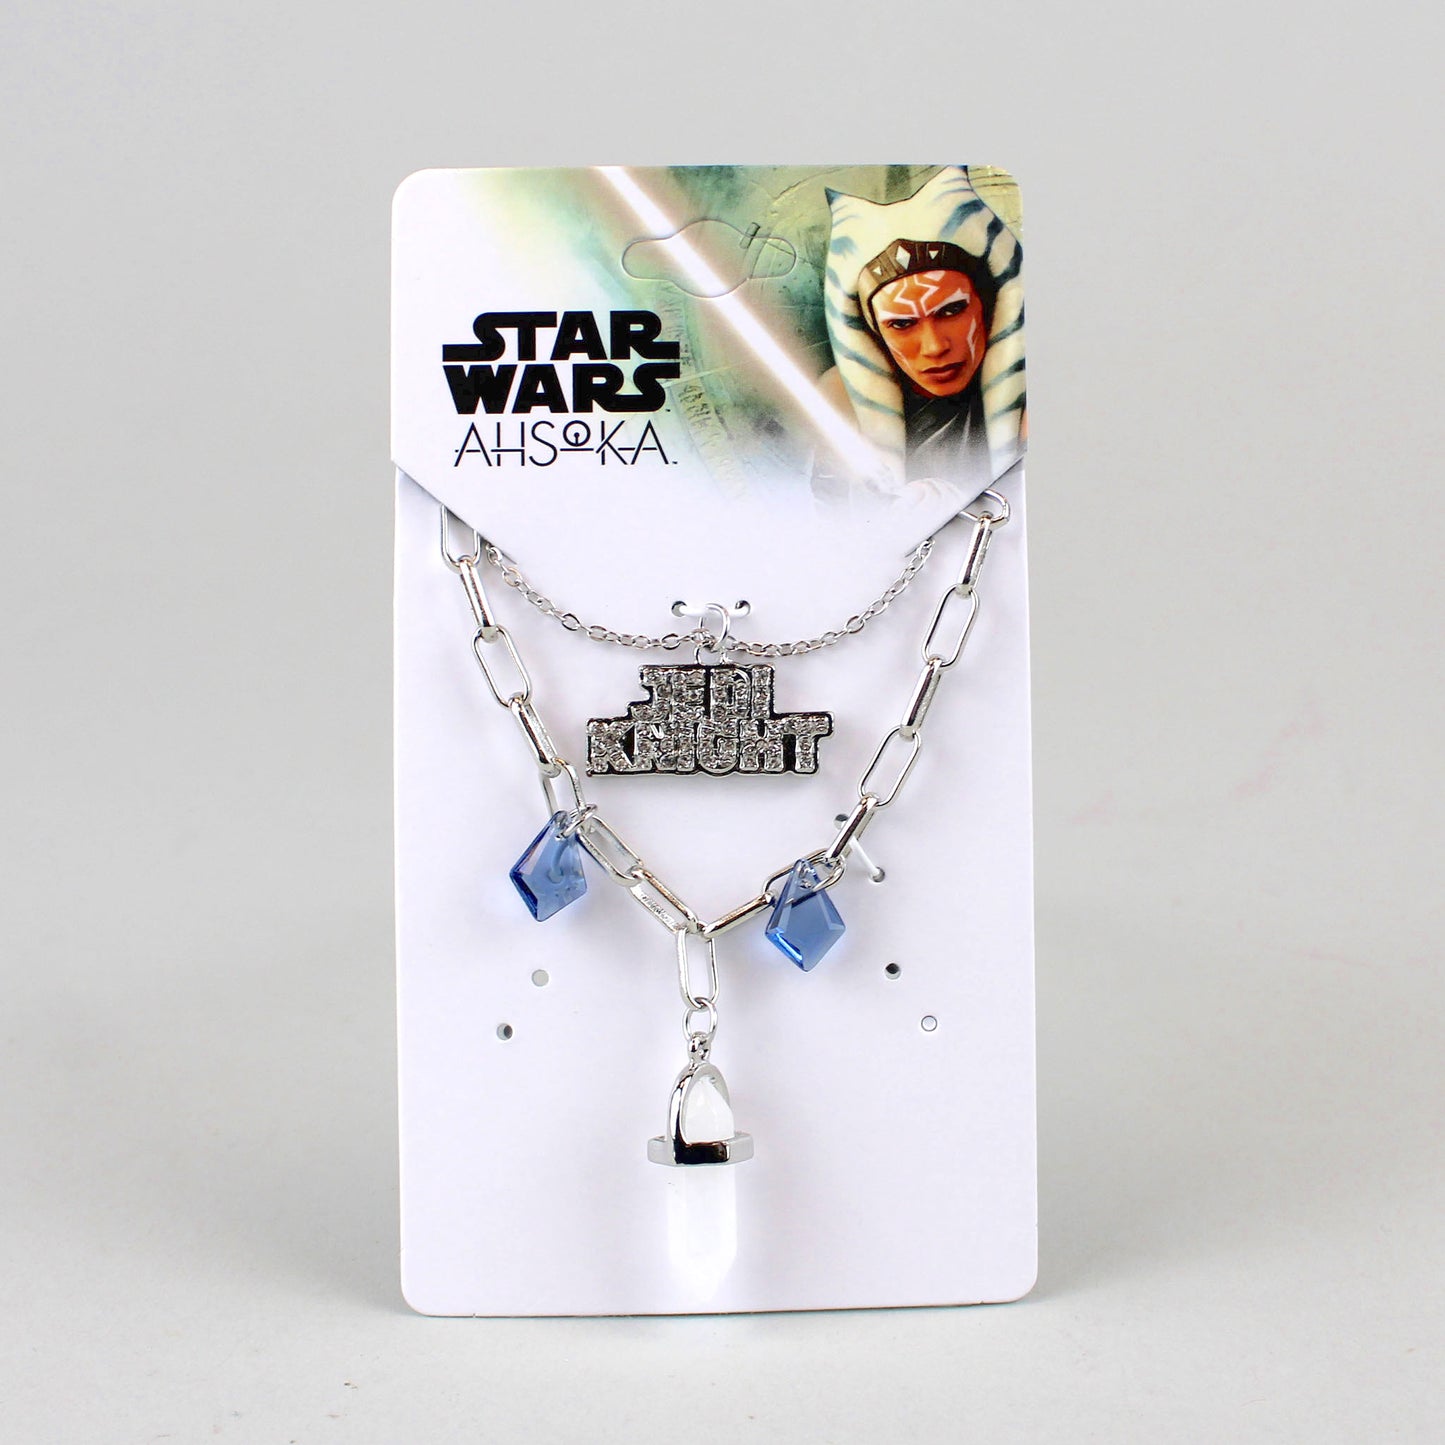 Ahsoka's Kyber Crystal (Star Wars: Ahsoka) Jedi Knight Necklace